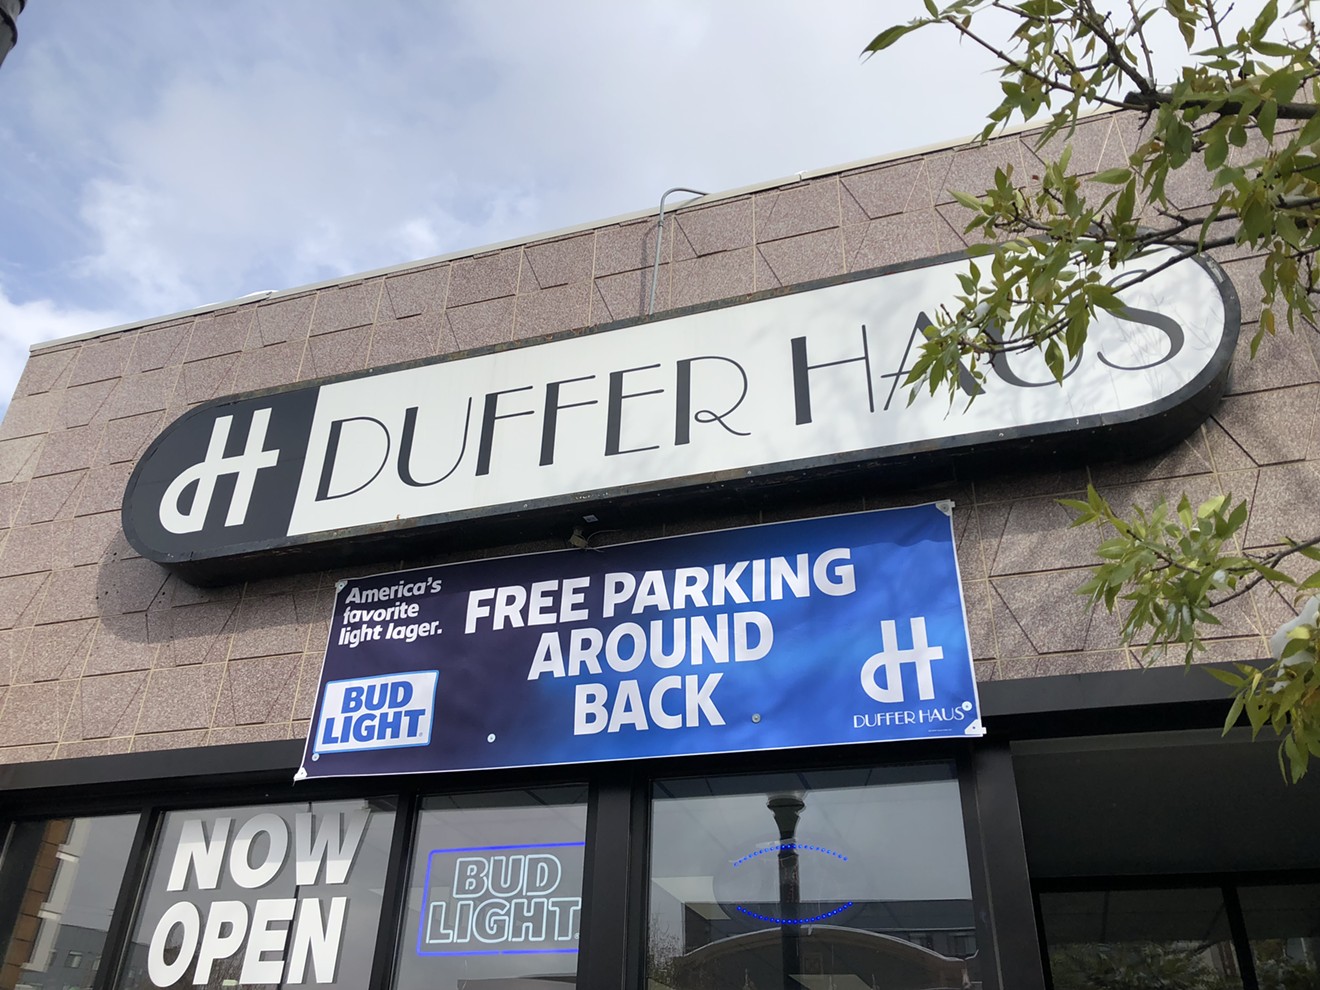 Duffer Haus is new to the downtown Englewood neighborhood.